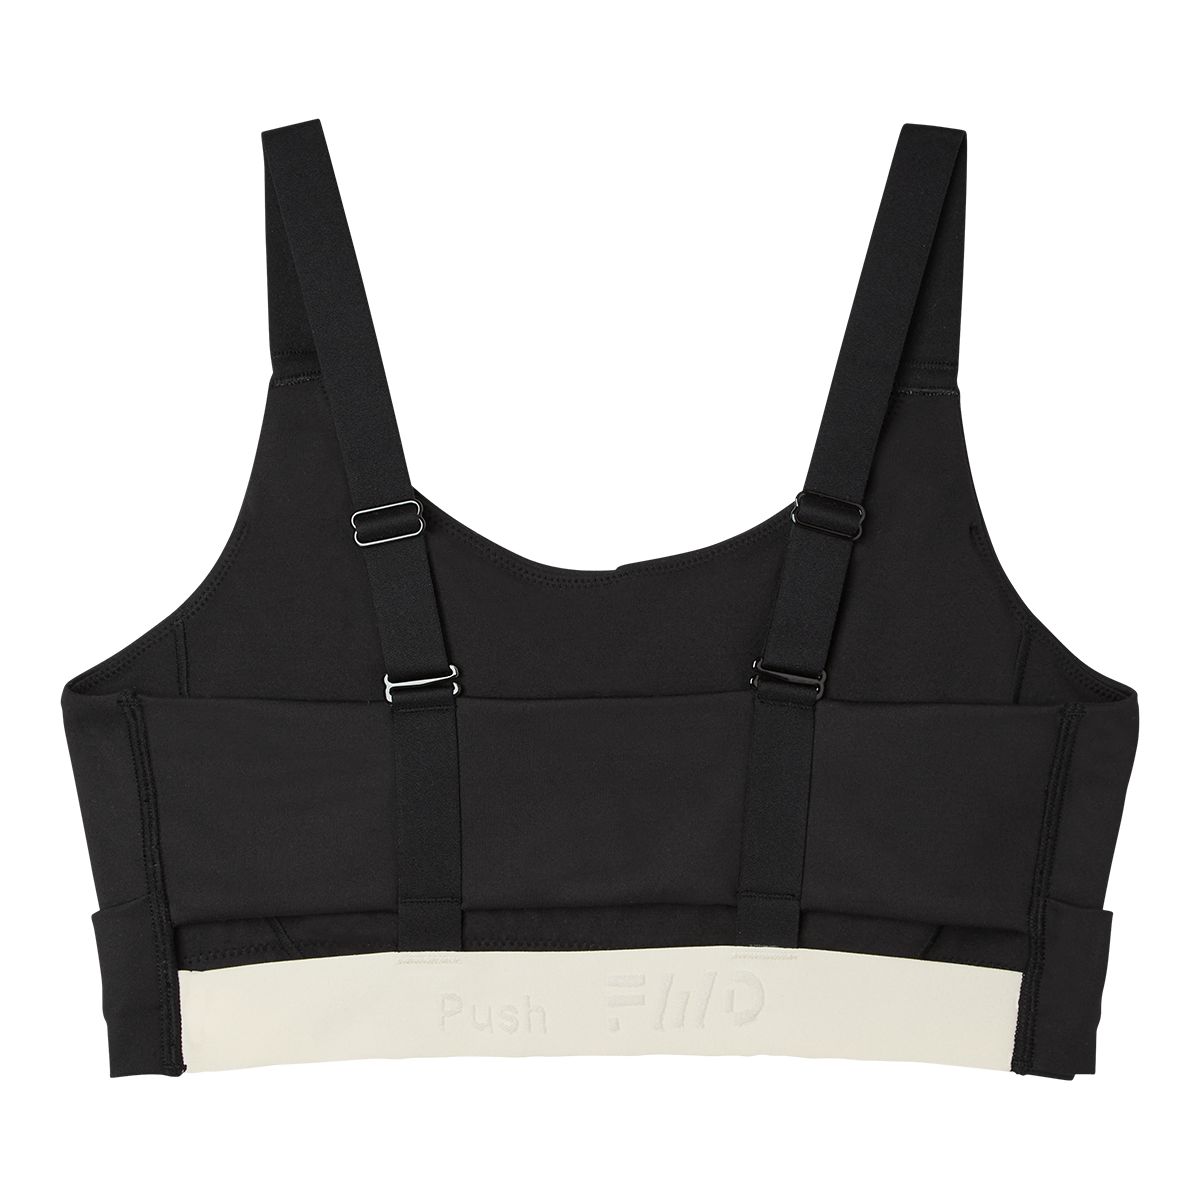 Ketyyh-chn99 Sport Bra Undershirts for Women Strappy Sports Bras